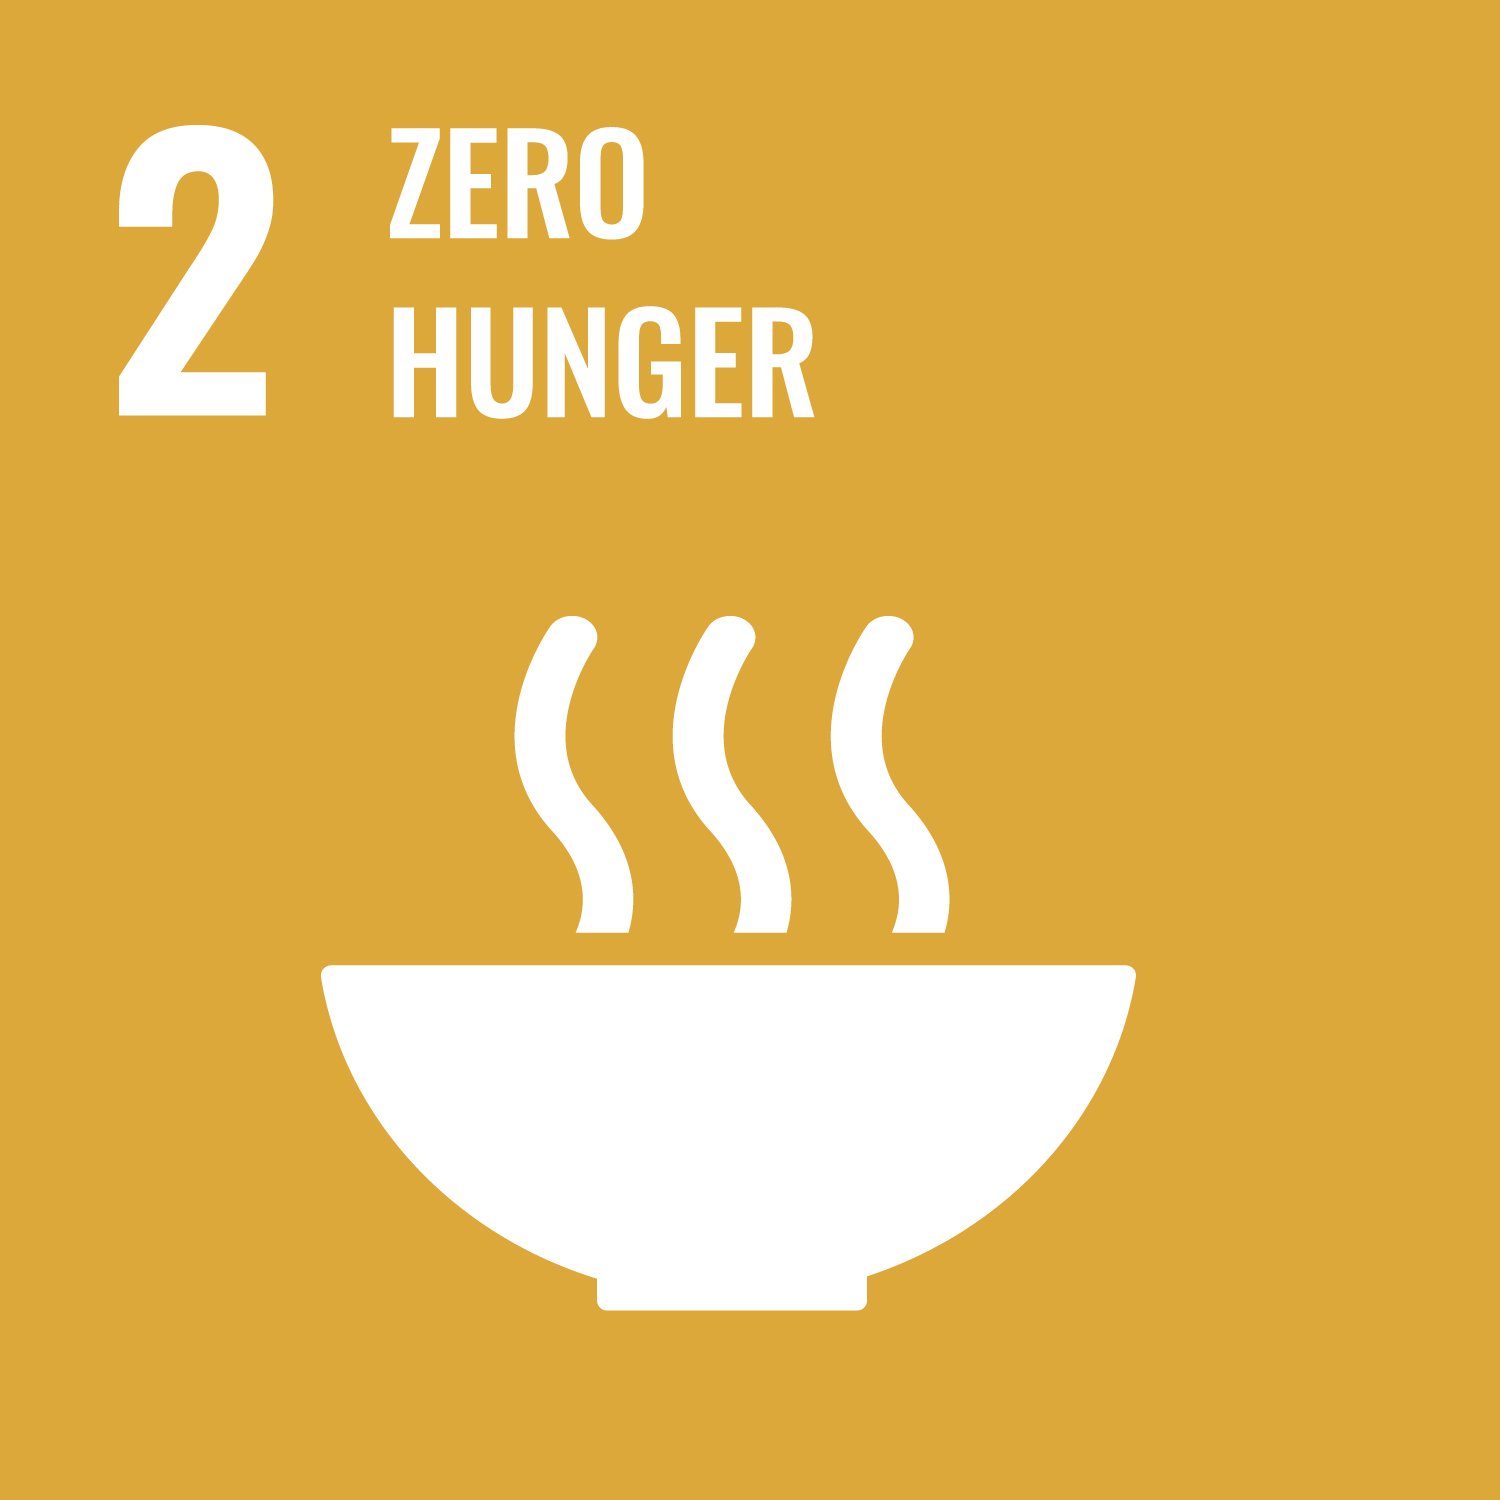 SDGs 2 ZERO HUNGER